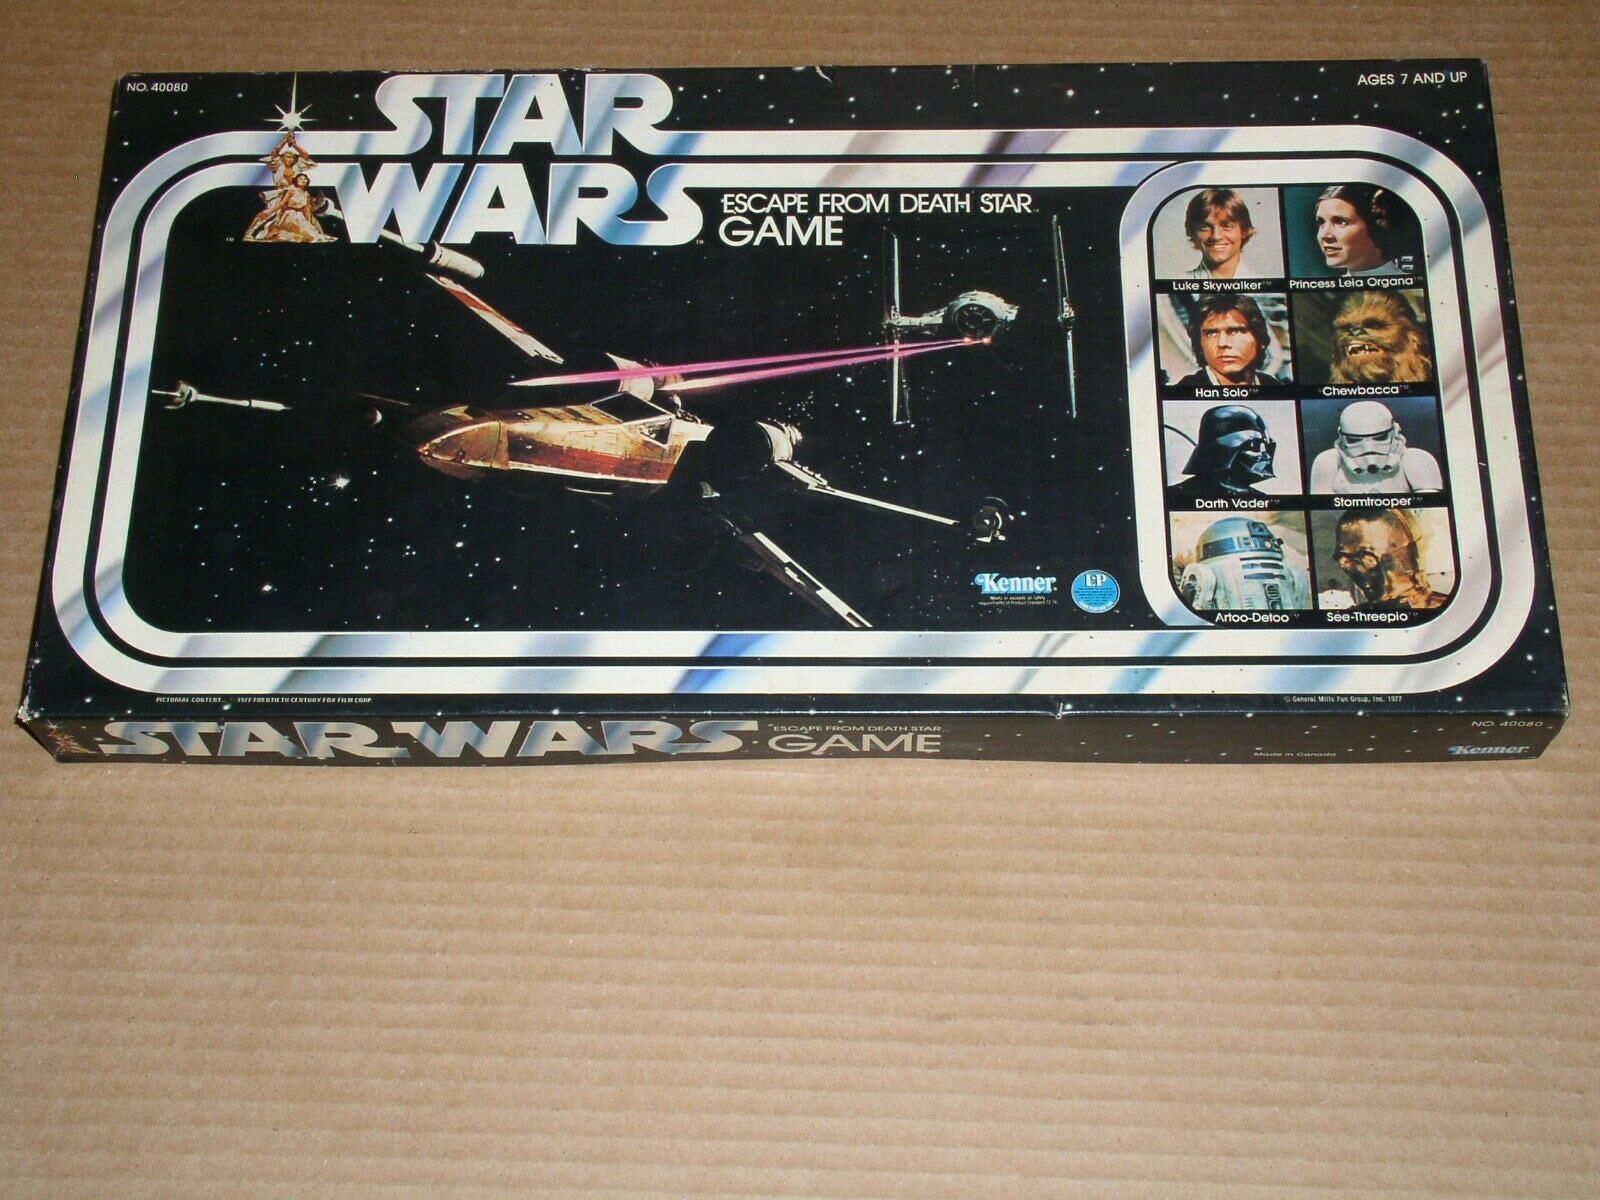 Star Wars Escape From Death Star Board Game Vintage 1977 Kenner Complete - $74.99